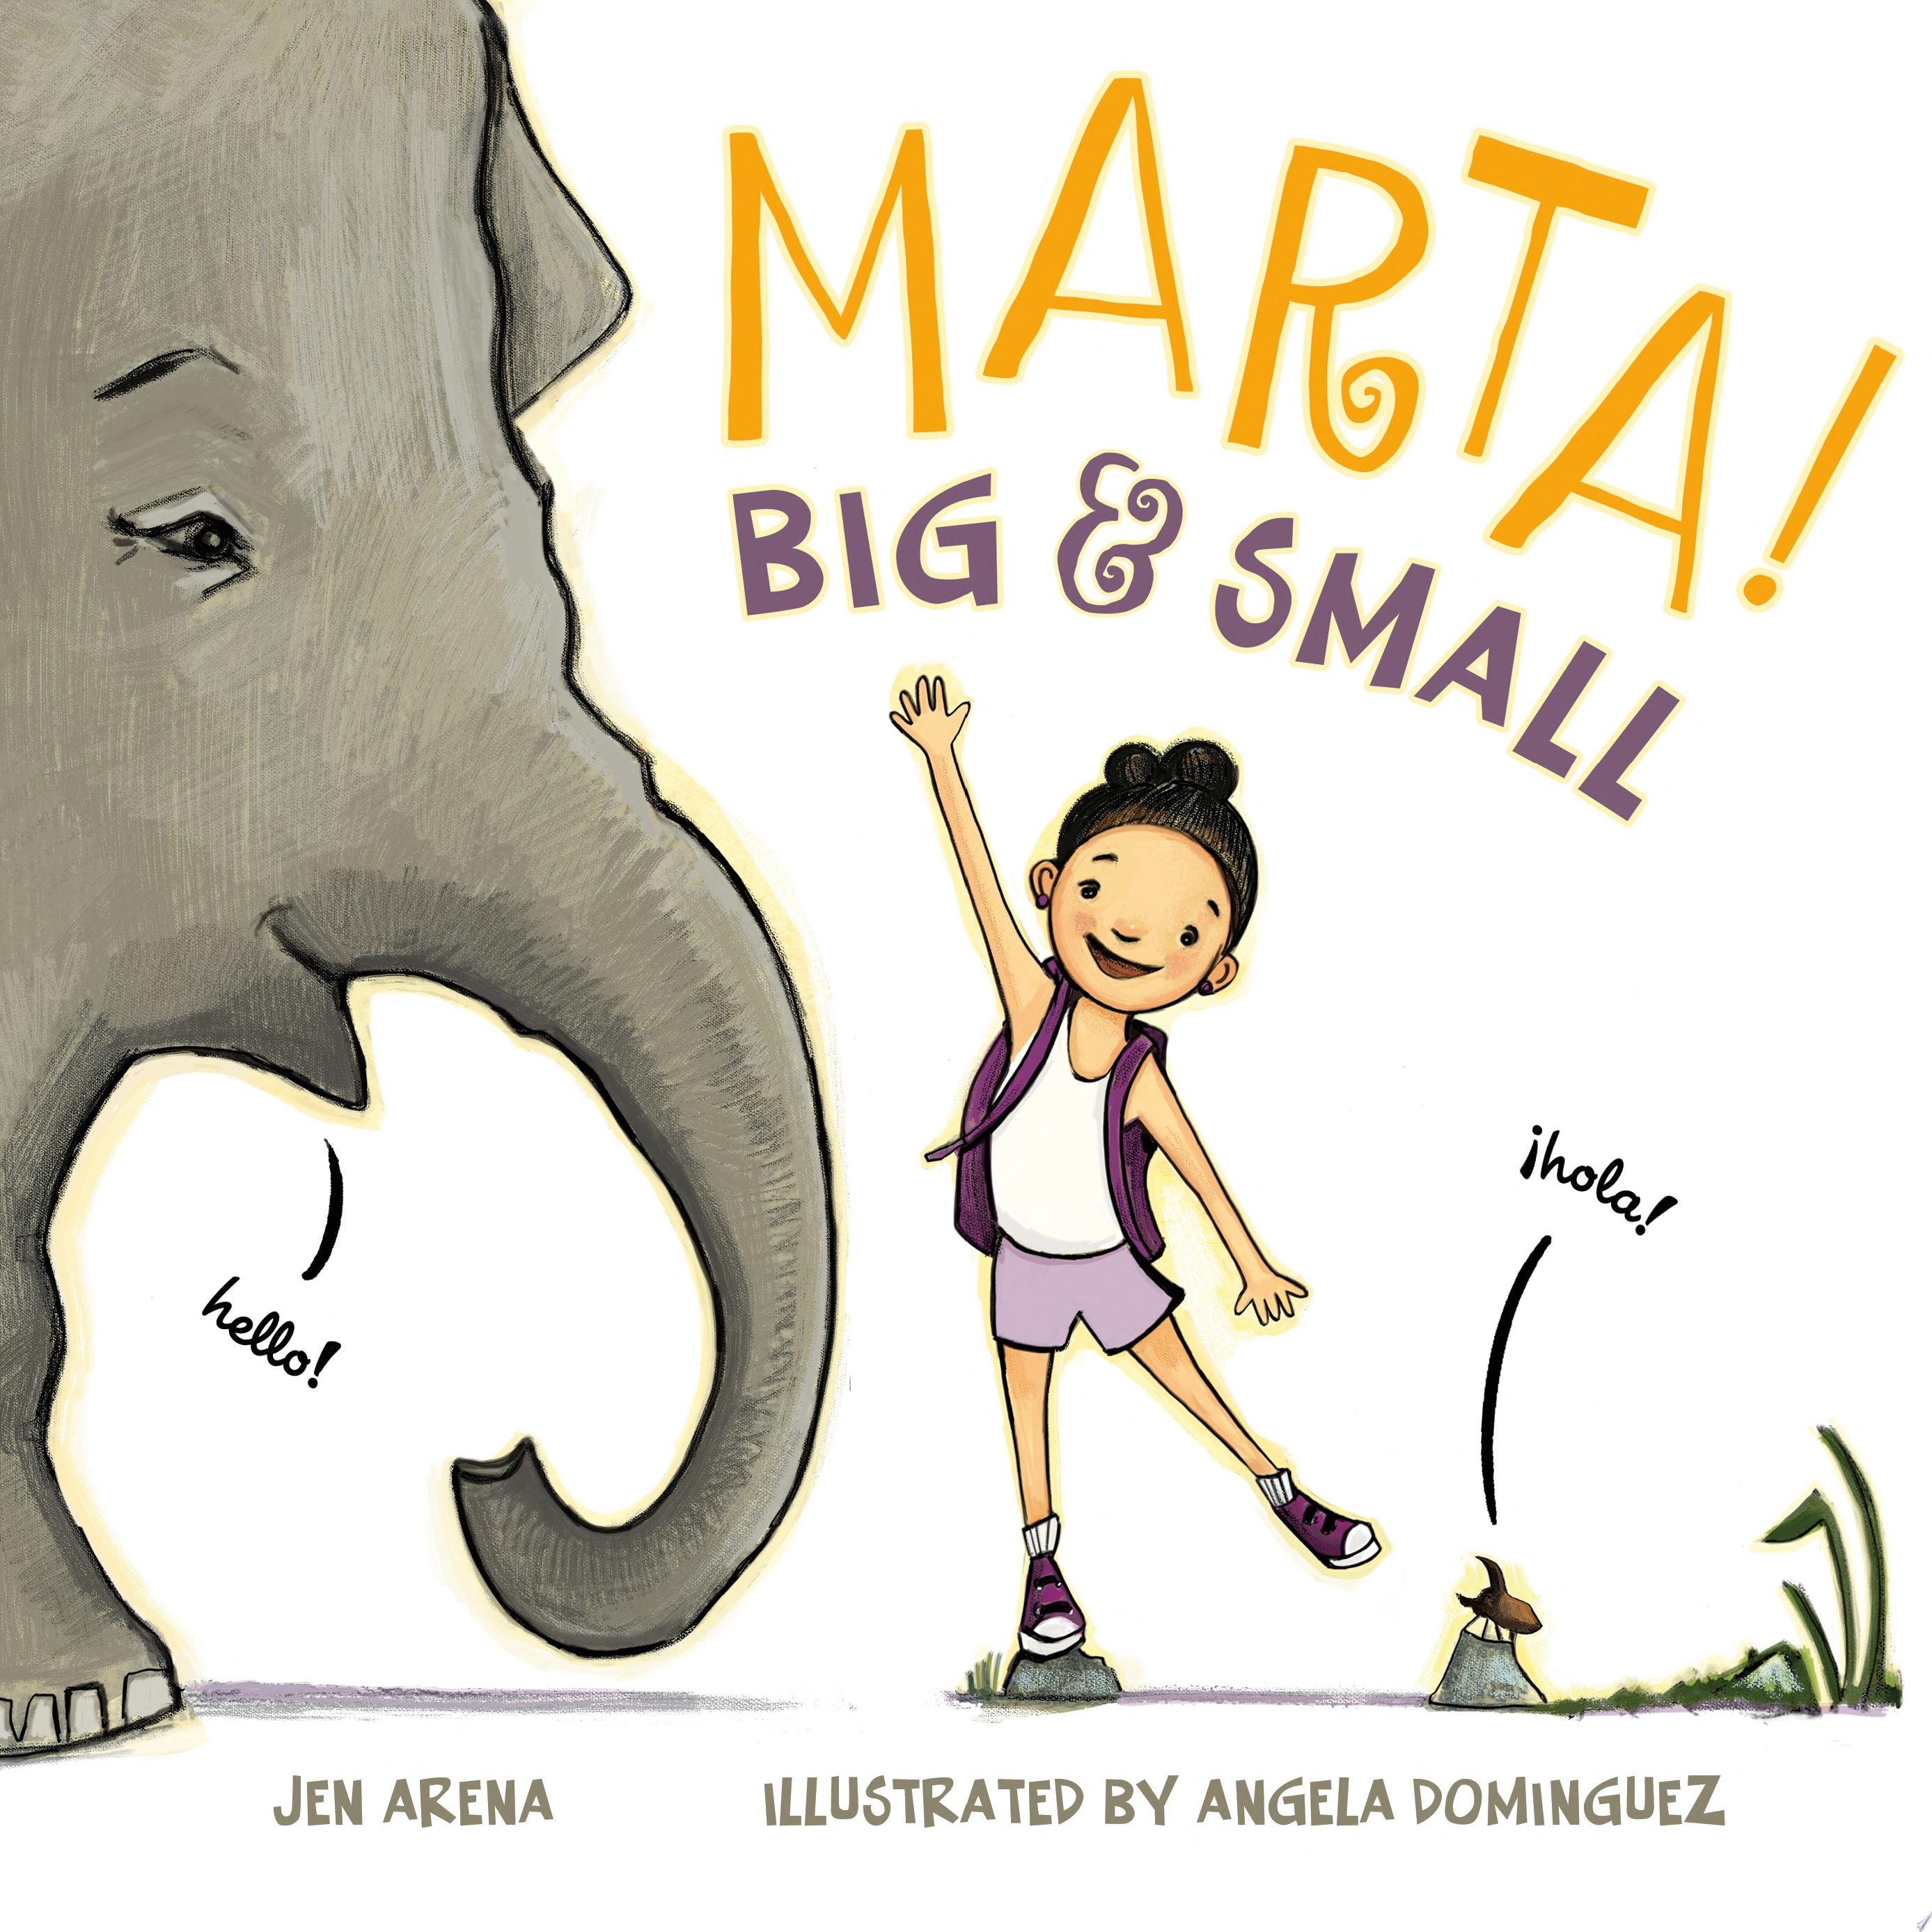 Image for "Marta! Big &amp; Small"